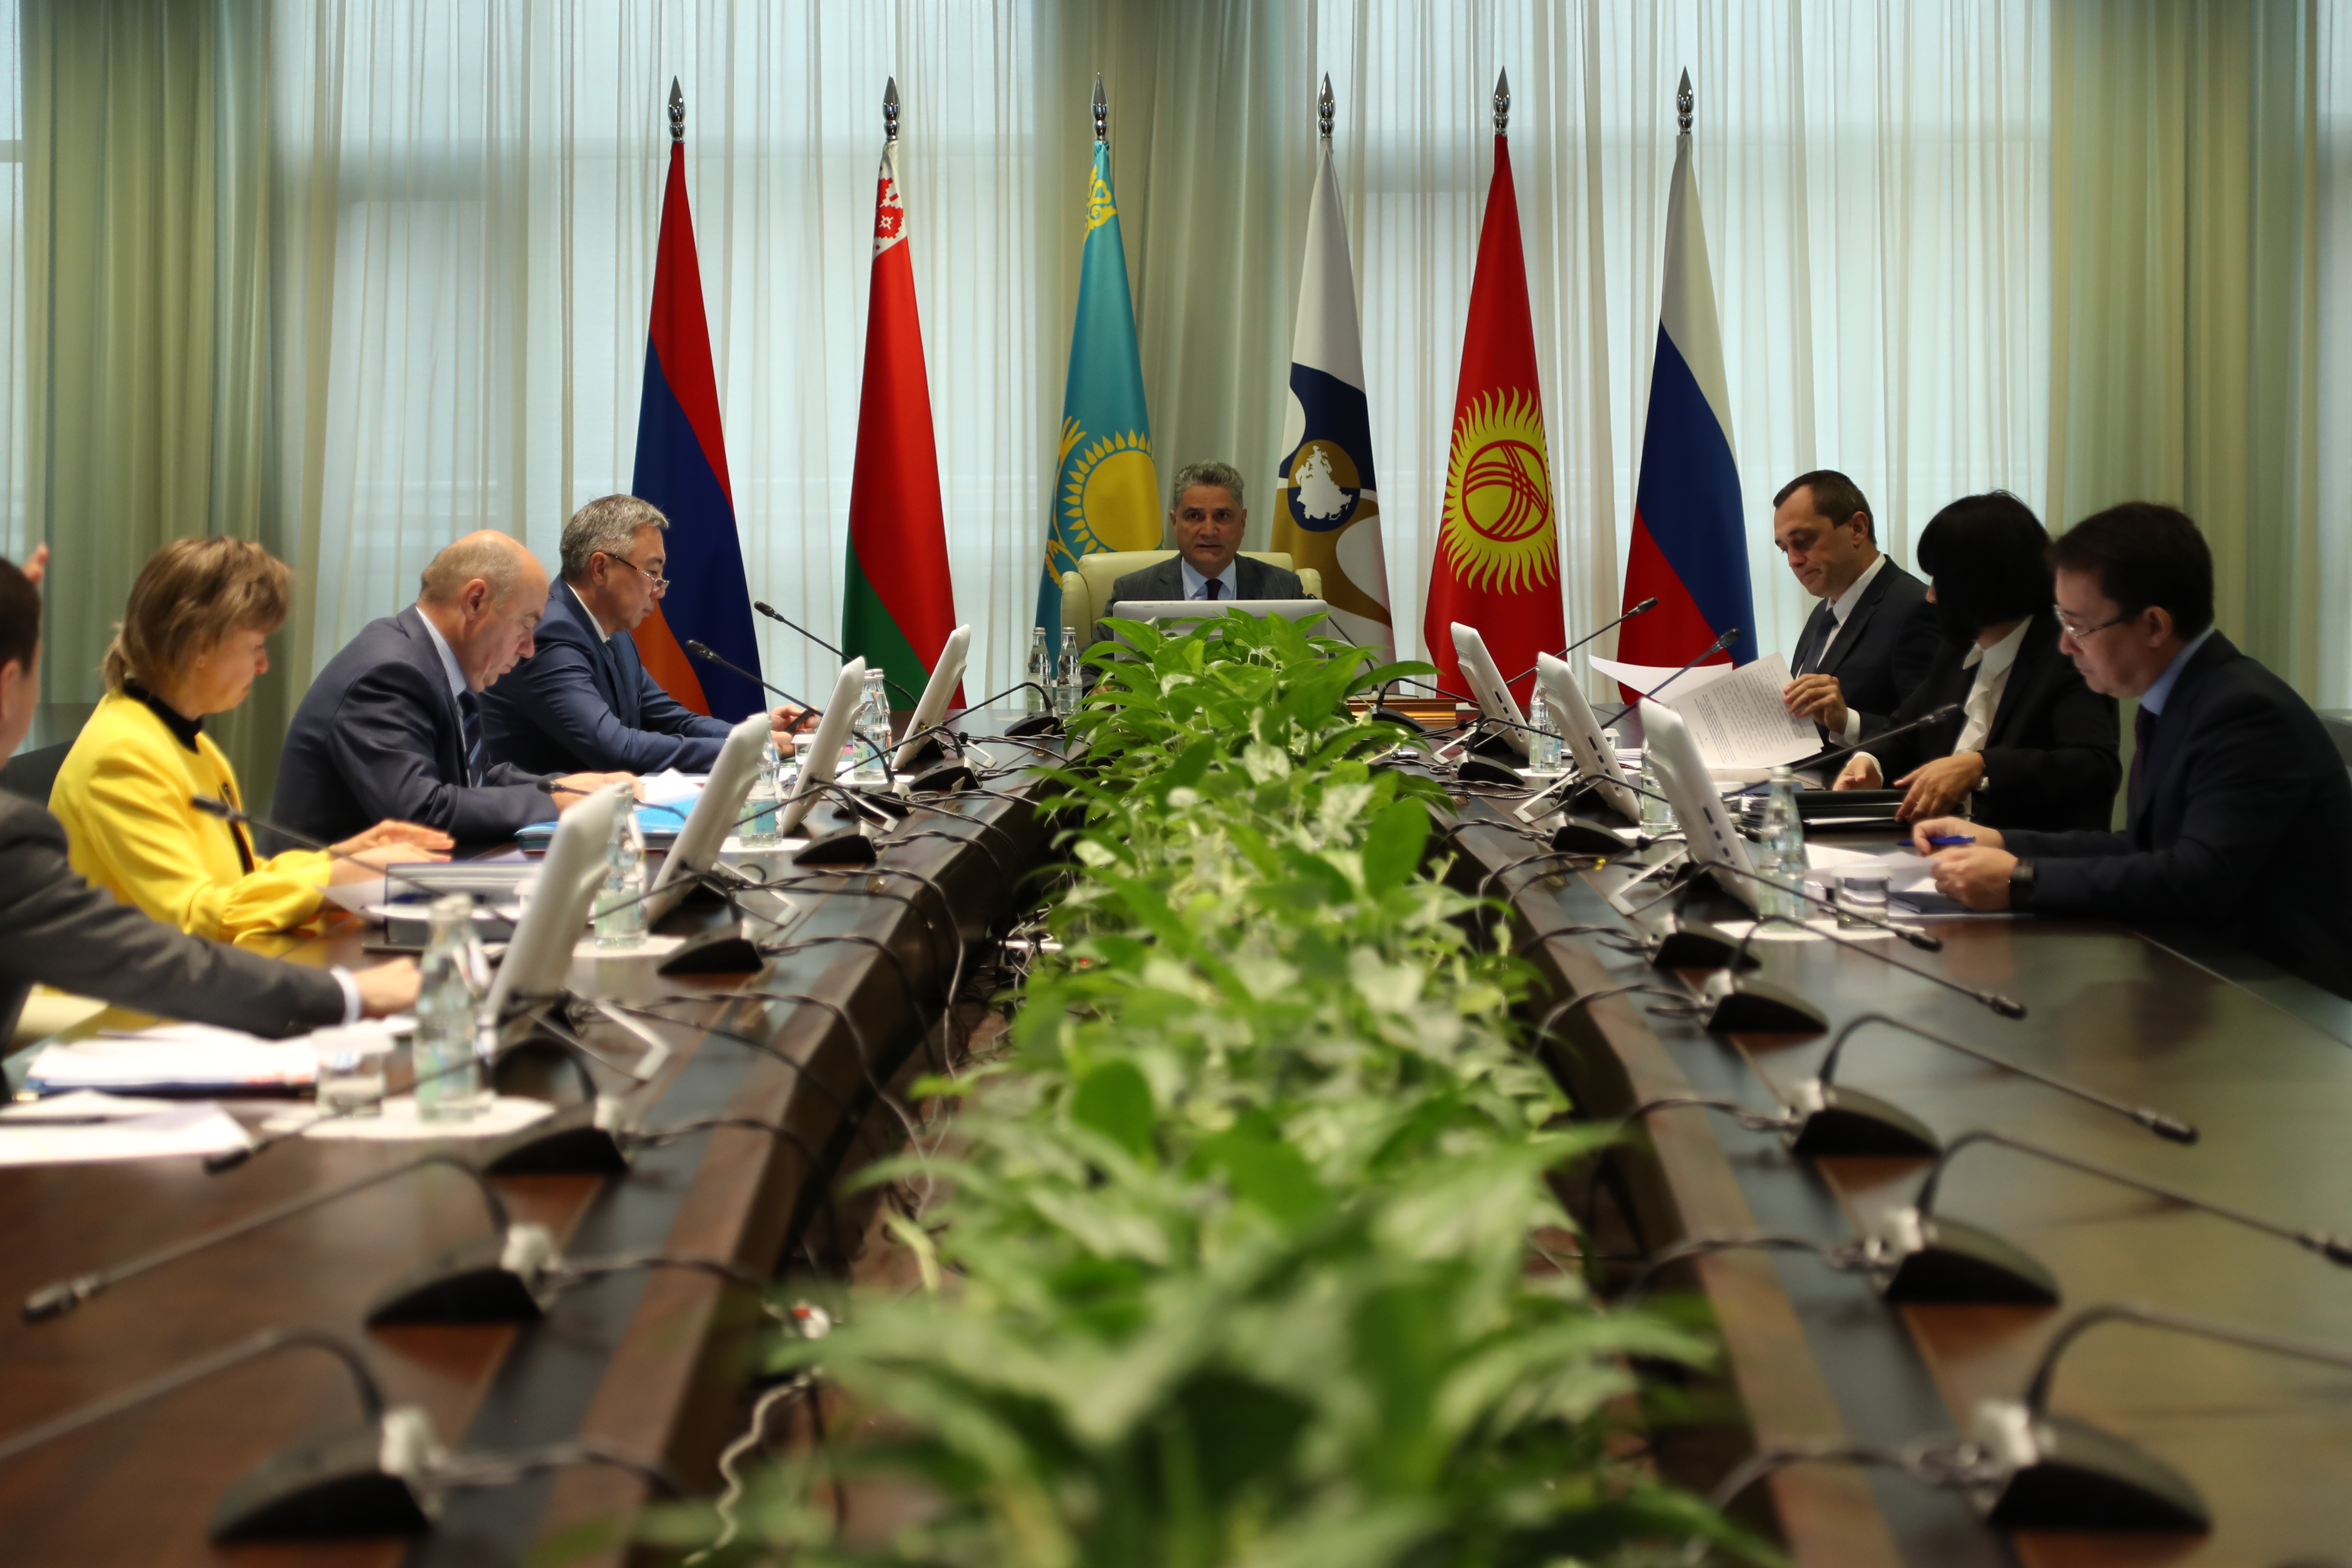 [Aug 9] Eurasian Economic Union (EAEU) Intergovernmental Council session held in Kyrgyzstan